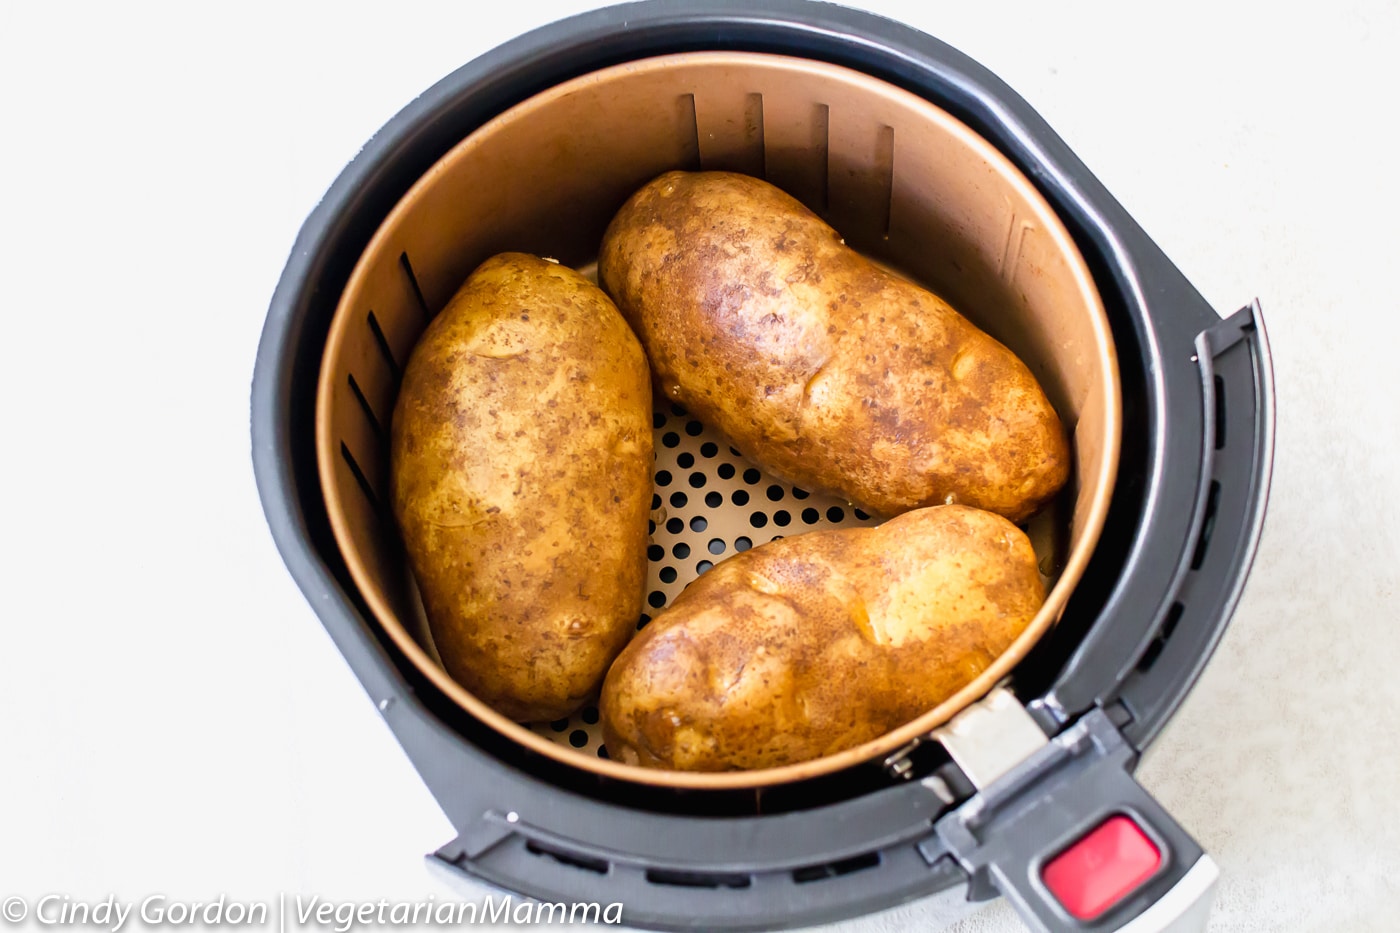 Air Fryer Baked Potatoes 